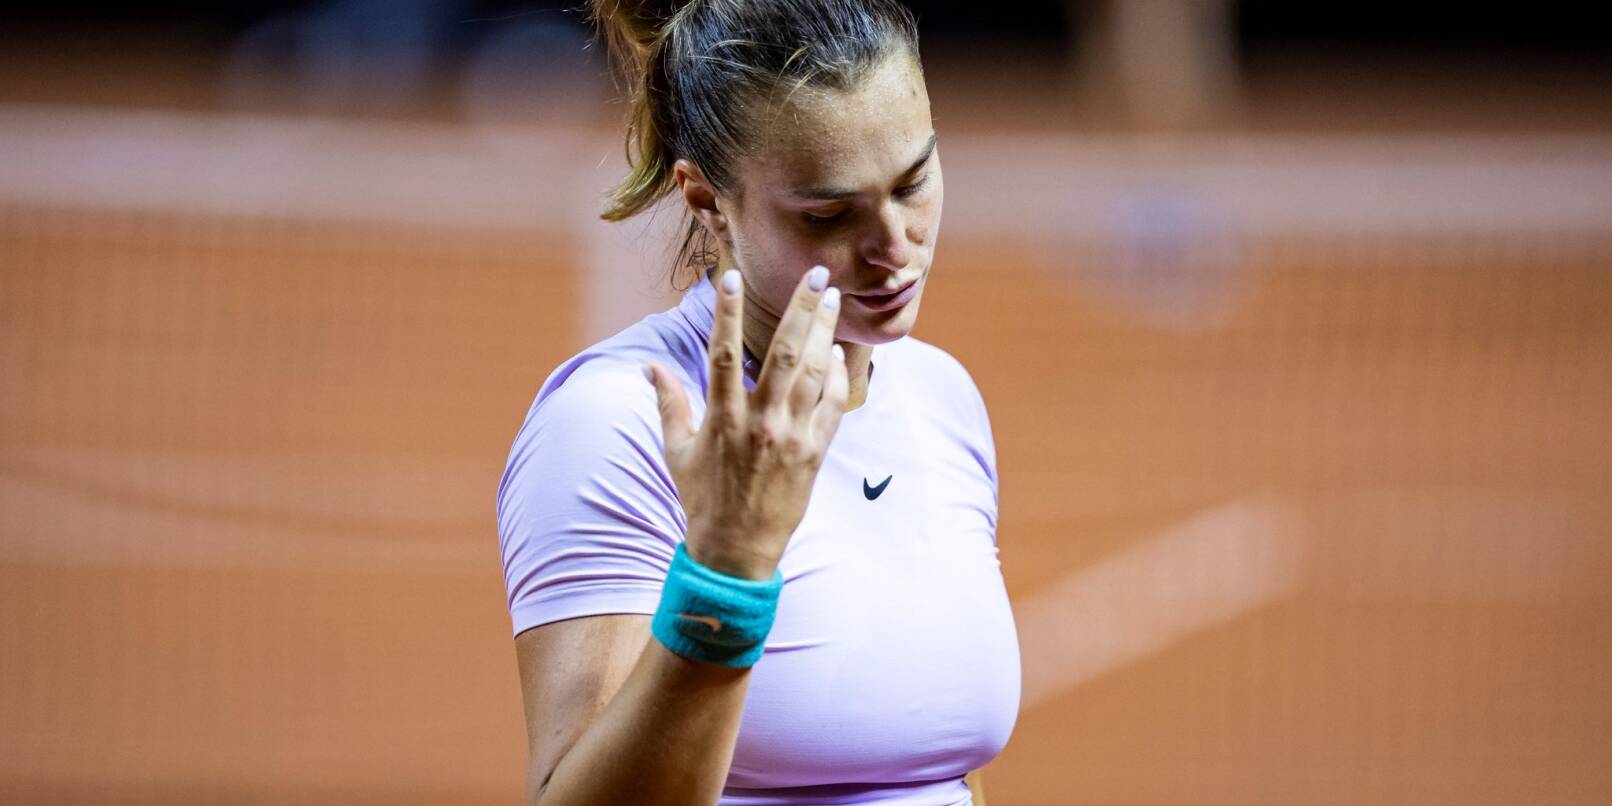 Tennisspielerin Aryna Sabalenka gestikuliert.